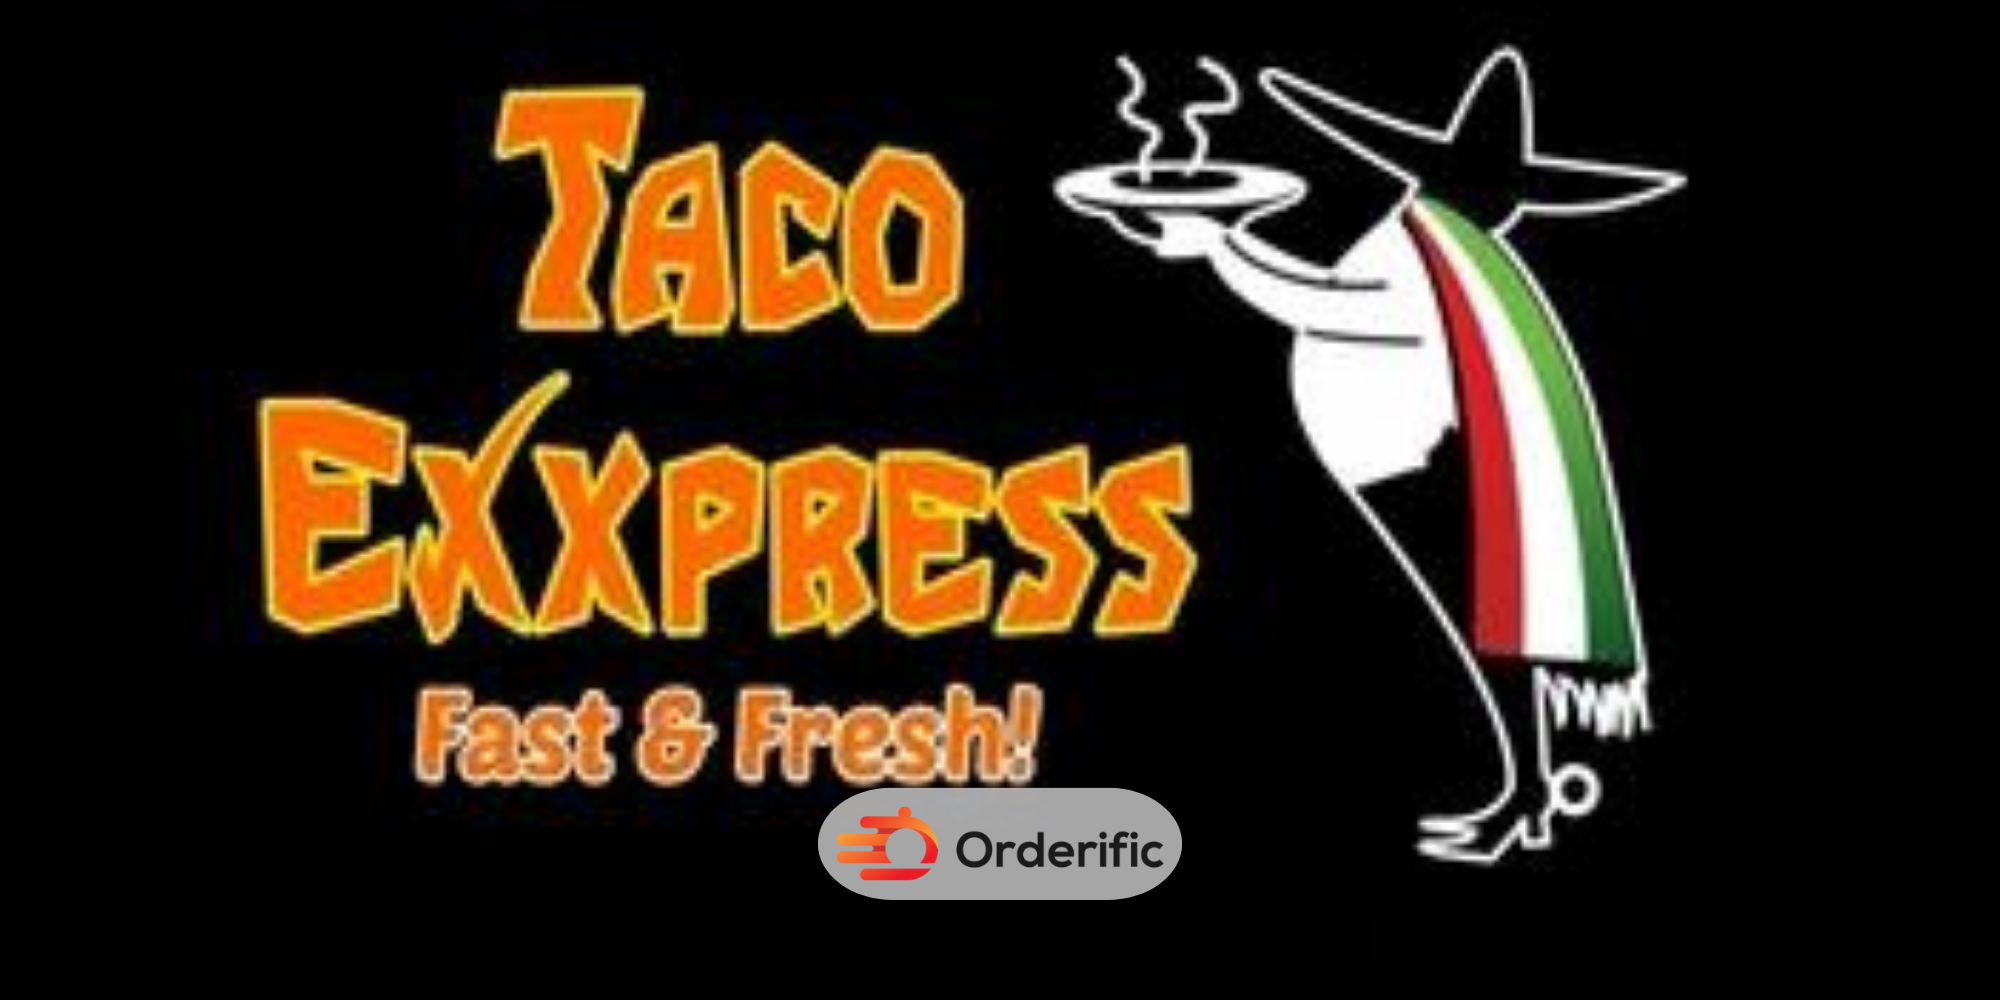 Taco express logo